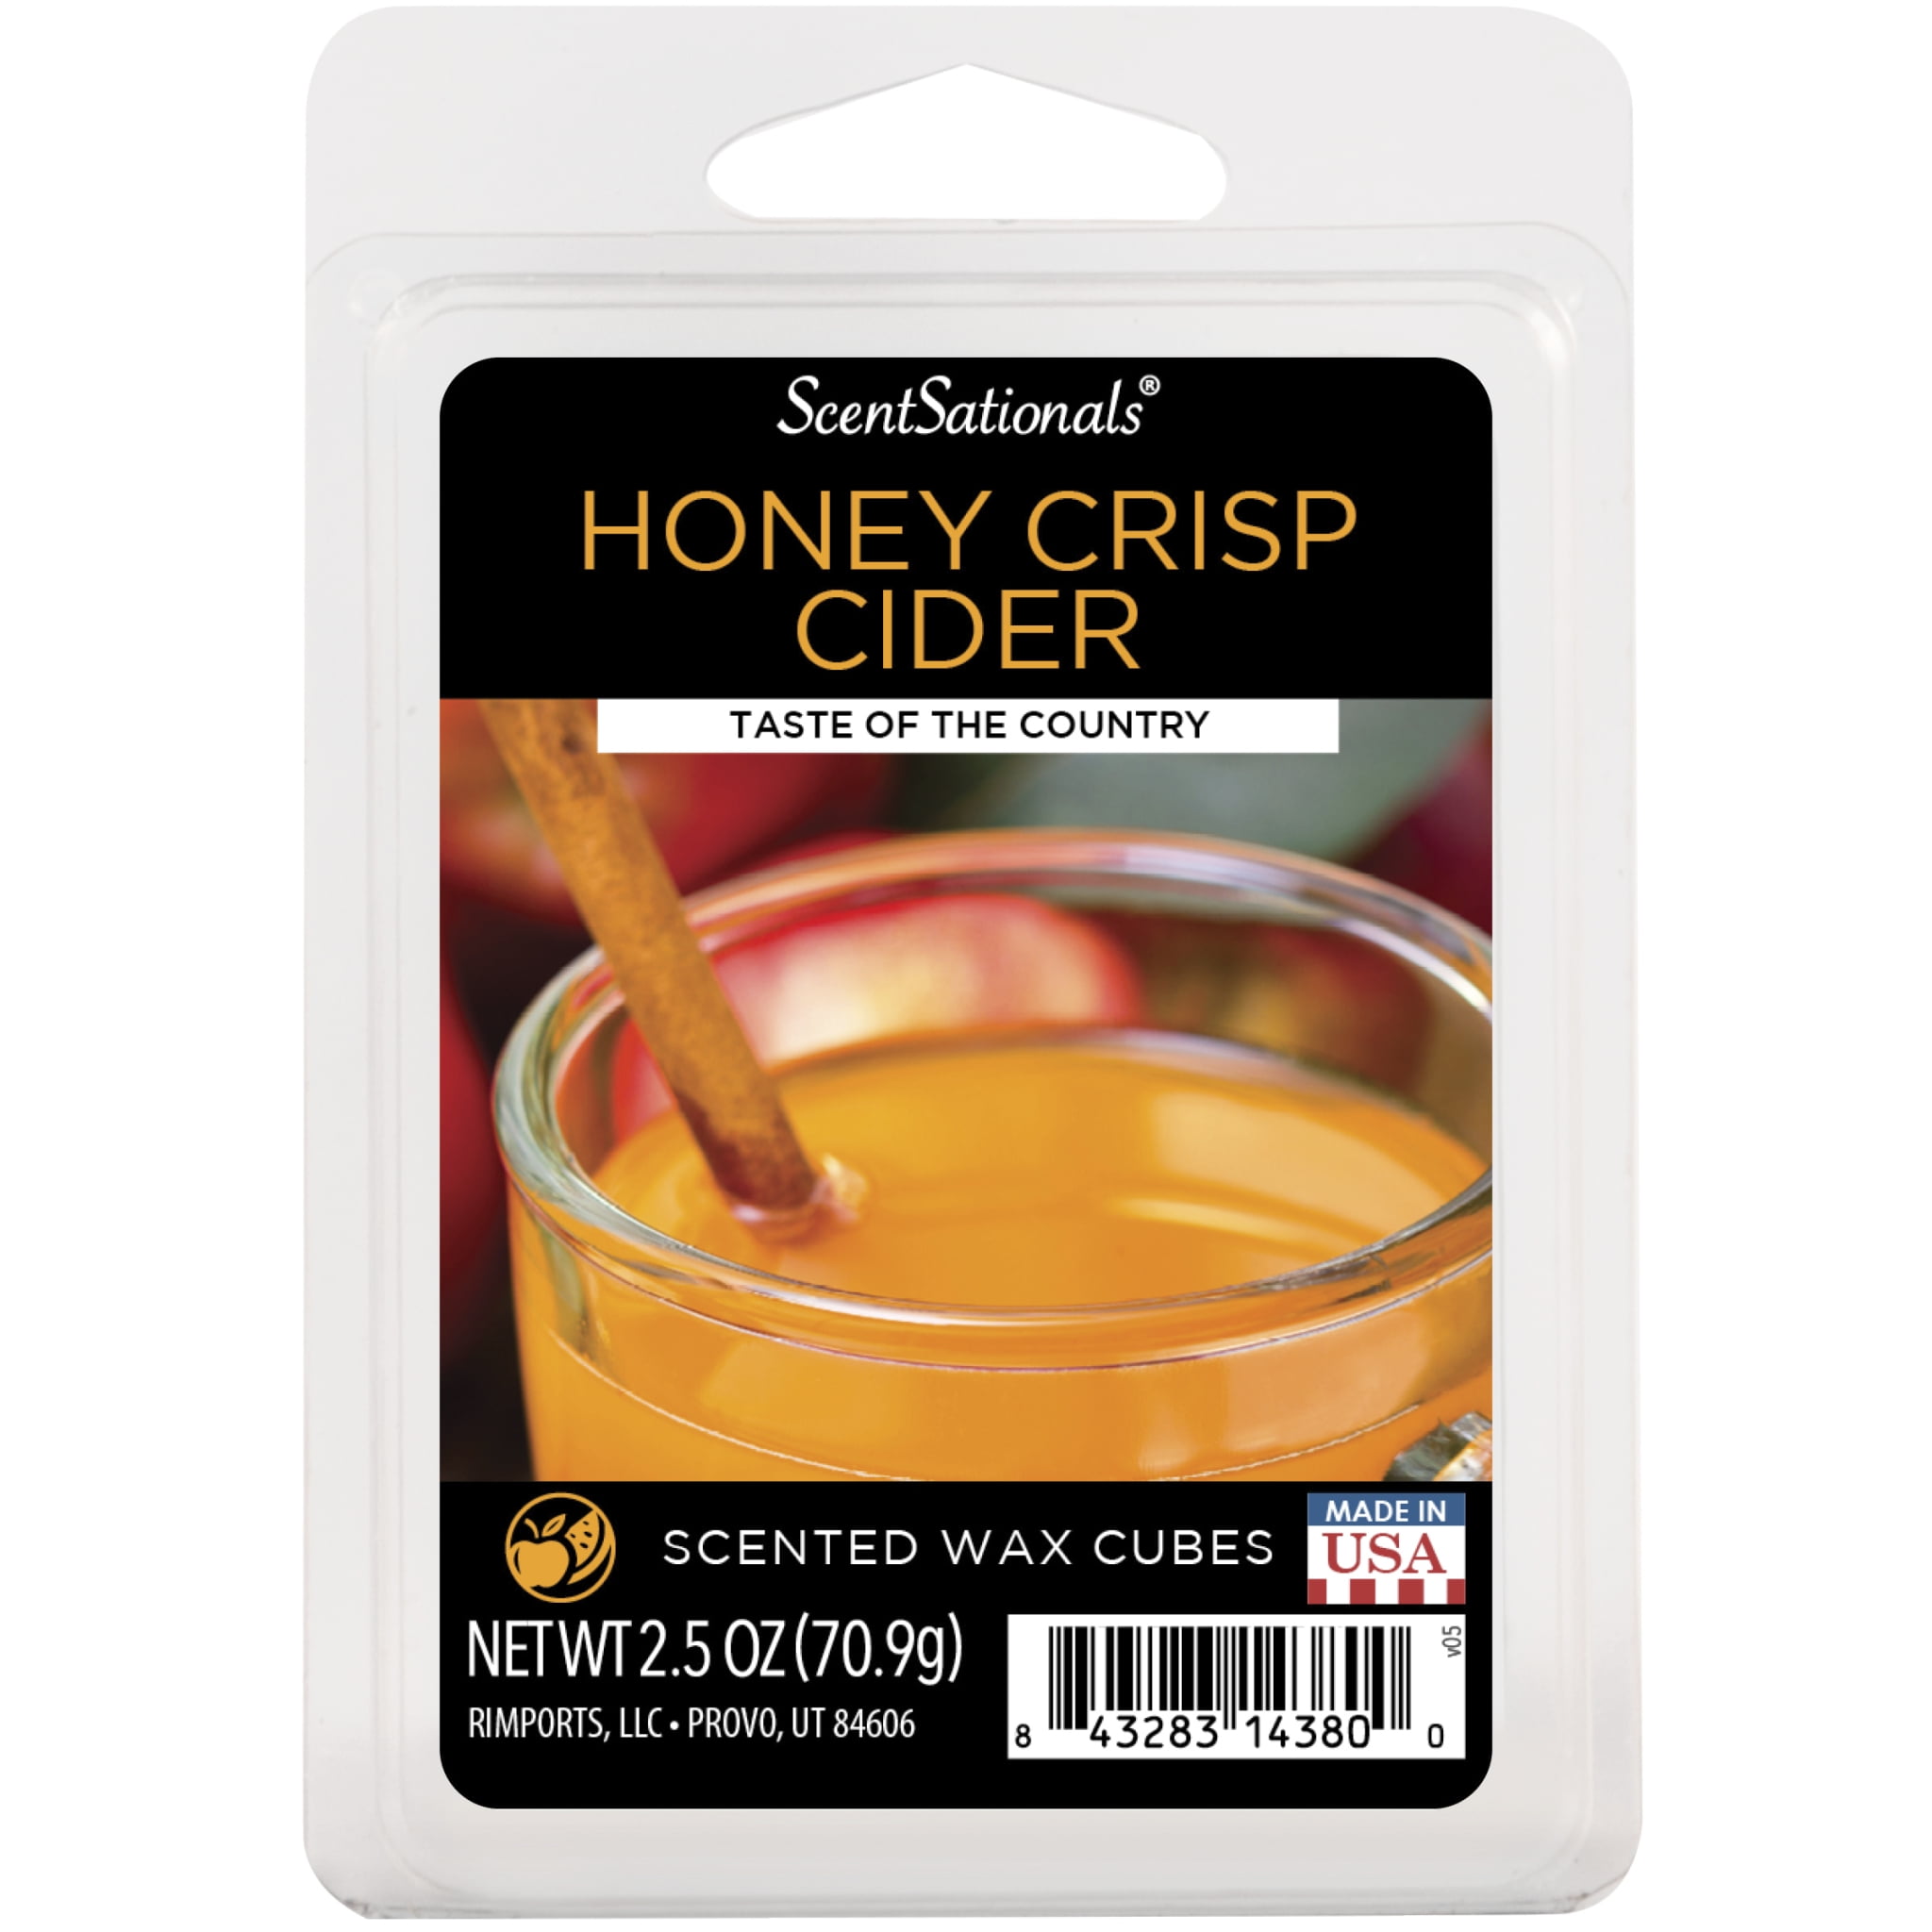 Yankee Candle Tarts Honeycrisp Apple Cider Wax Melts 1 ct